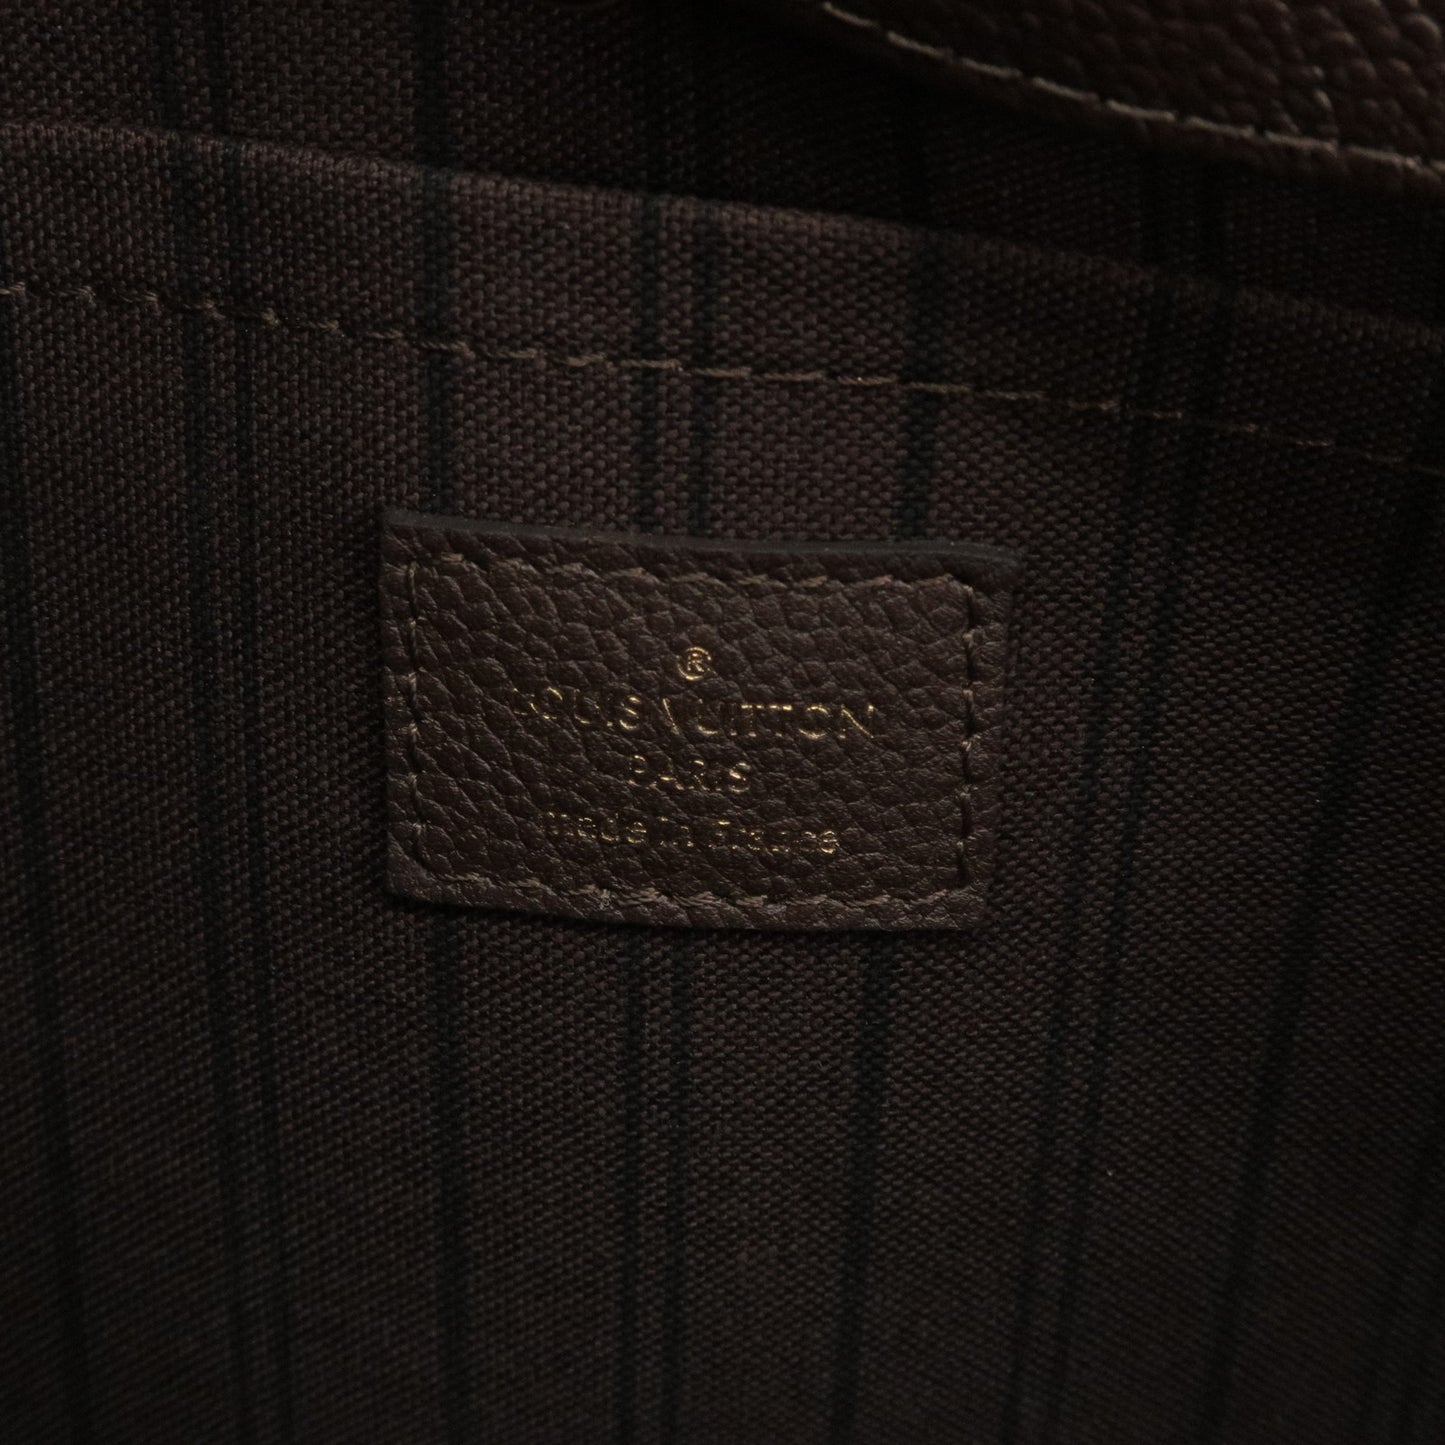 Louis Vuitton Black Monogram Empreinte Montaigne MM Bag Louis